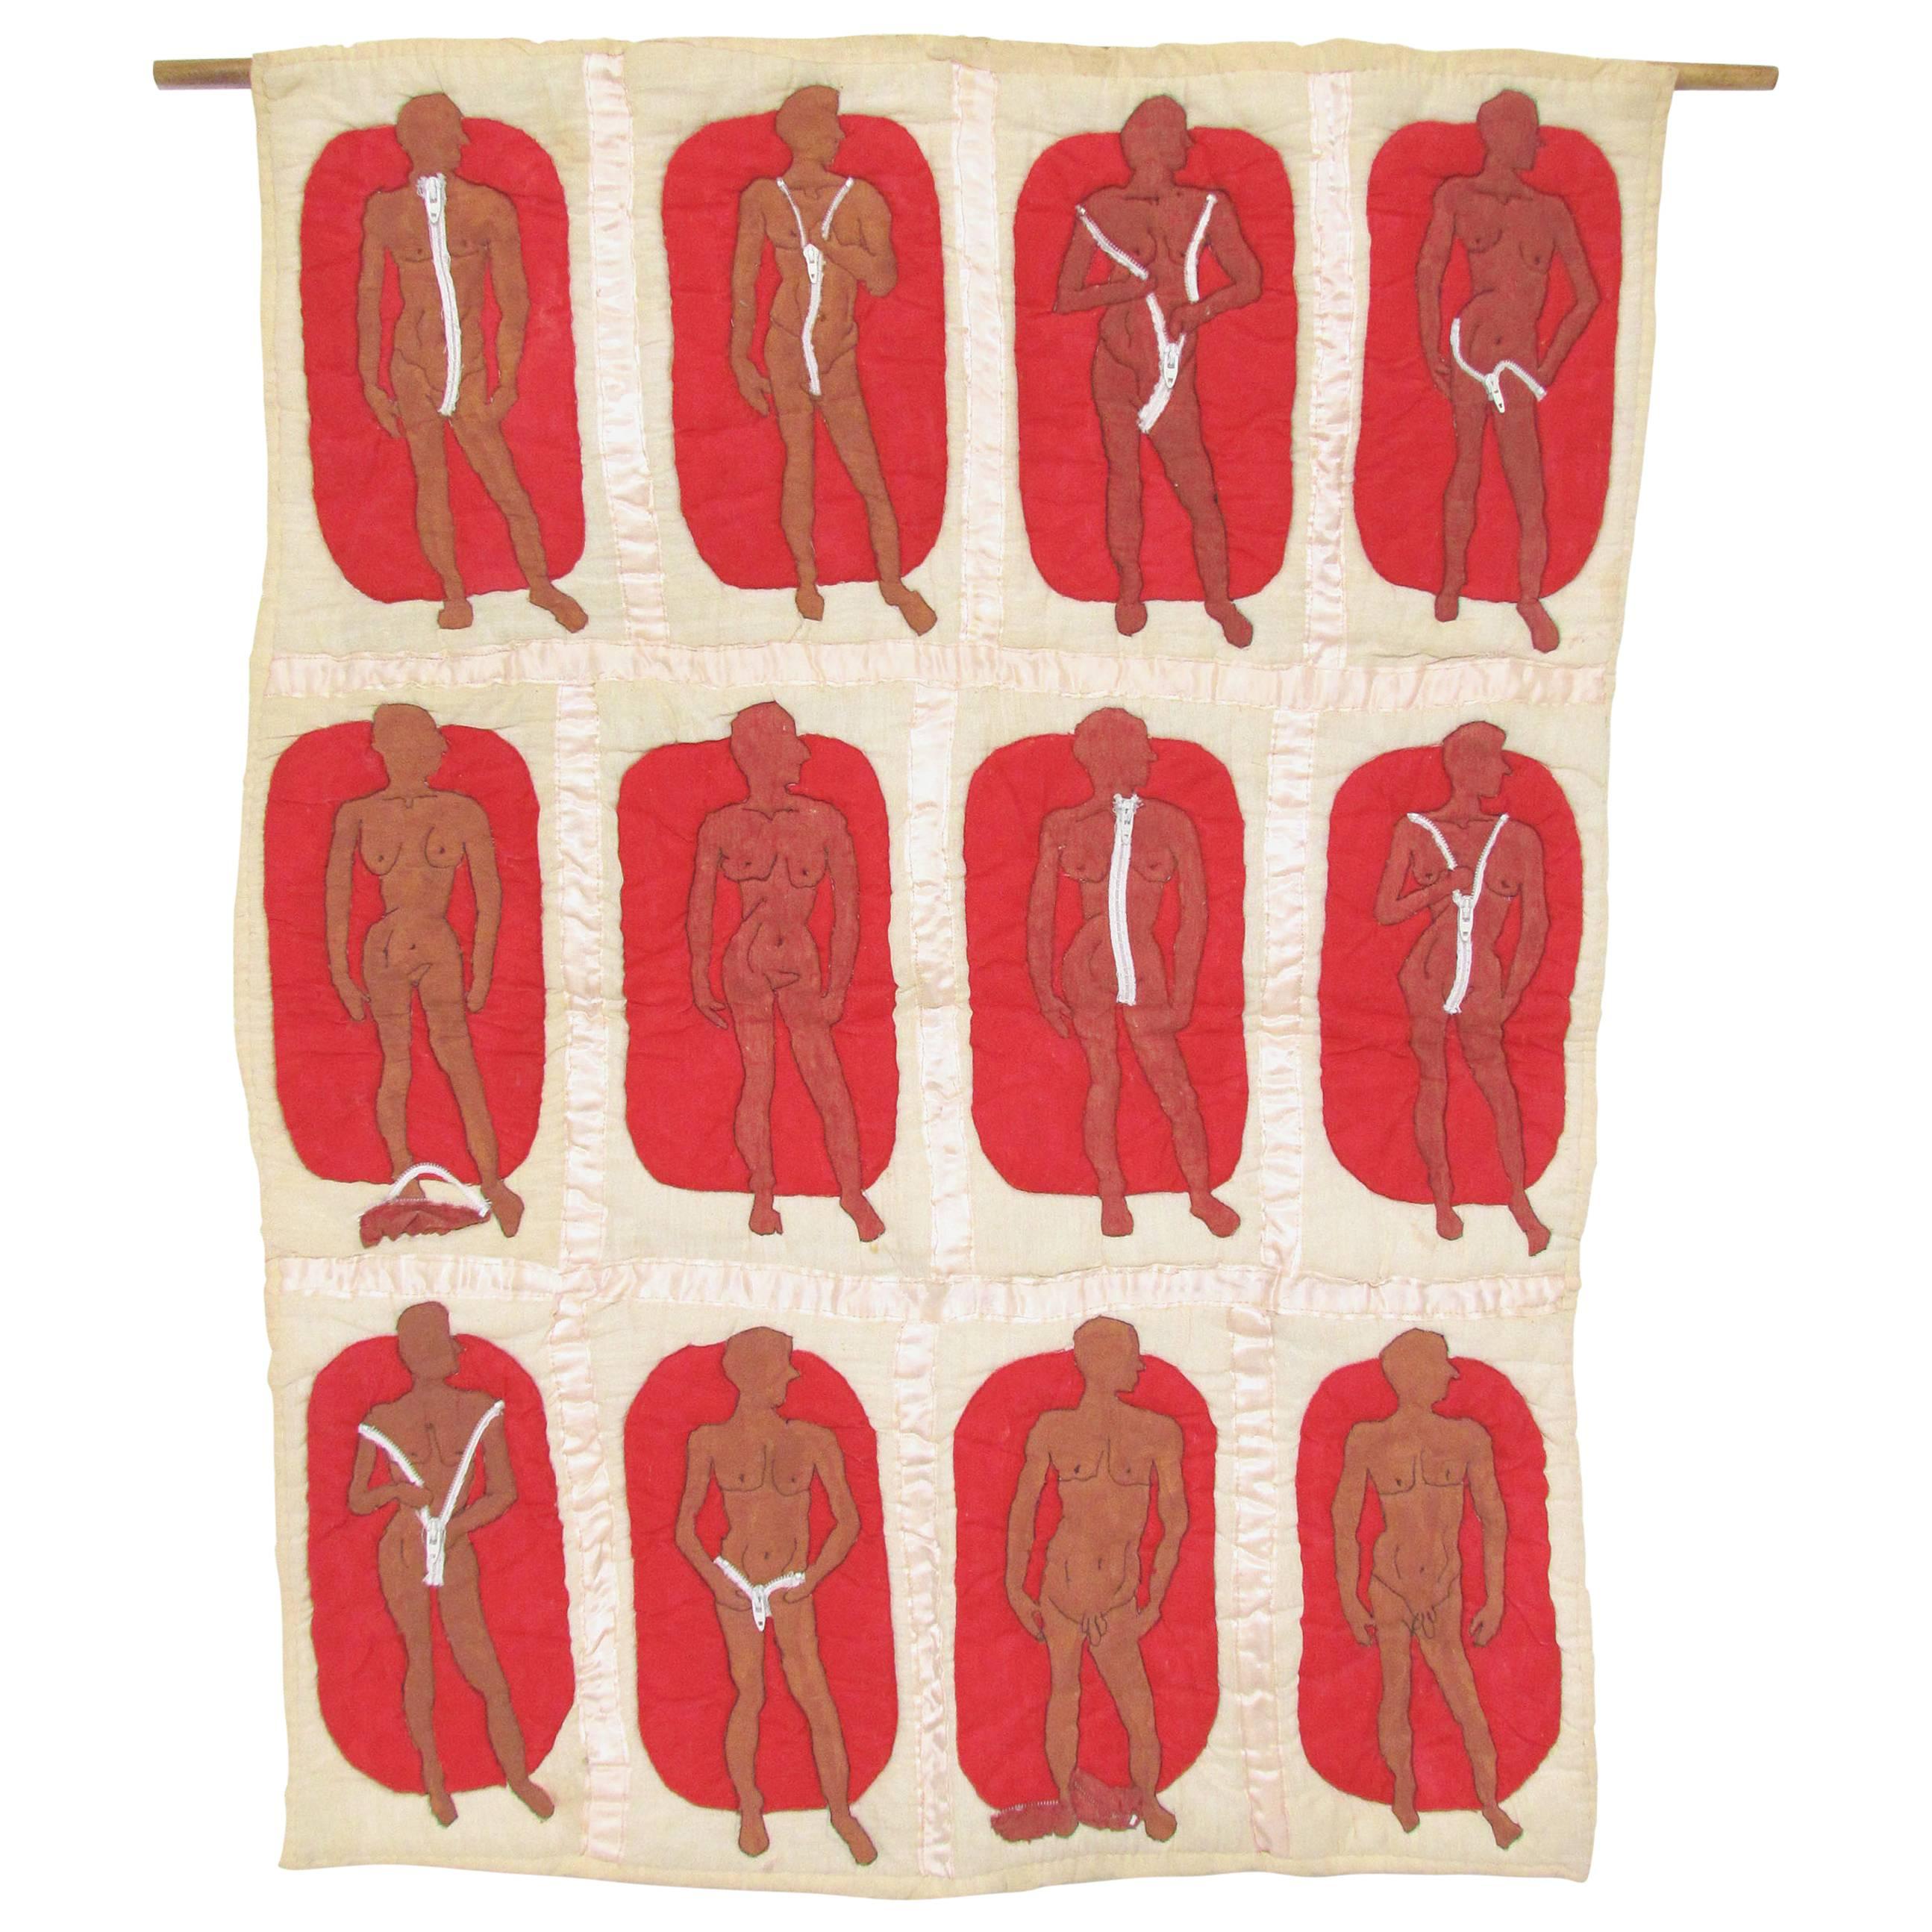 Rare 1970s Handmade Textile Art Wall Hanging Depicting Gender Transformation